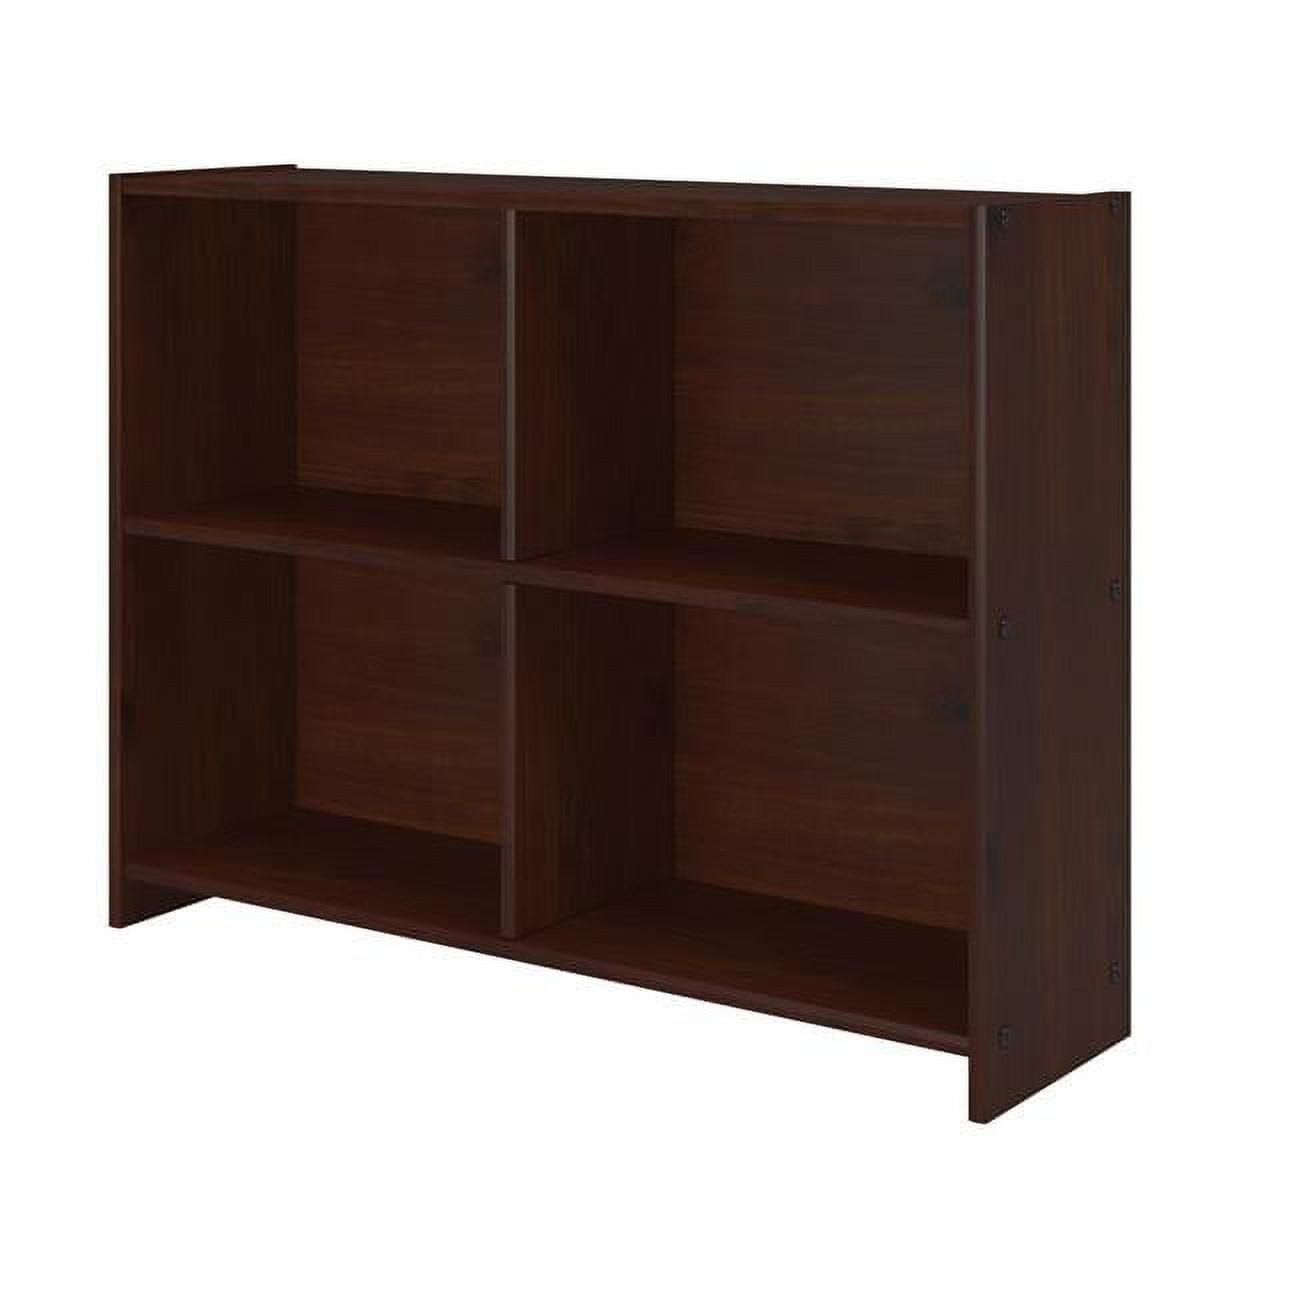 Donco Kids Contemporary Cappuccino Bookcase for Bedroom Storage